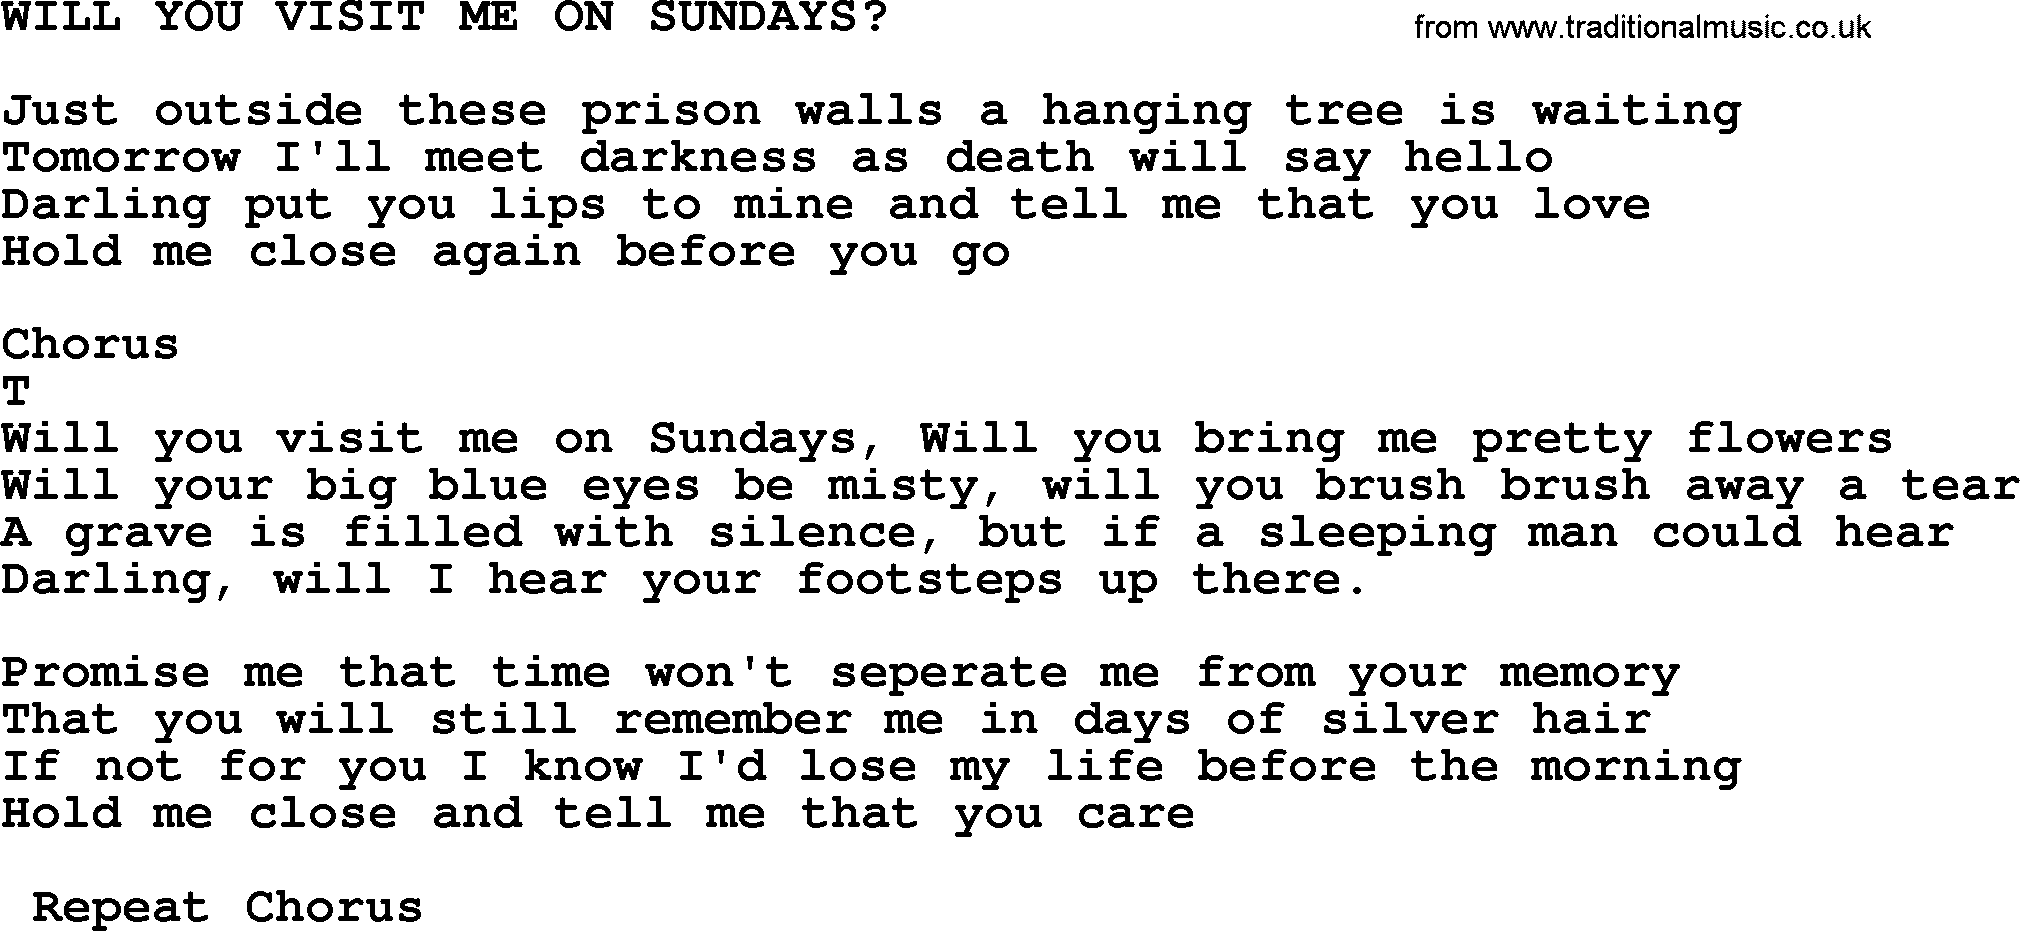 Merle Haggard song: Will You Visit Me On Sundays_, lyrics.